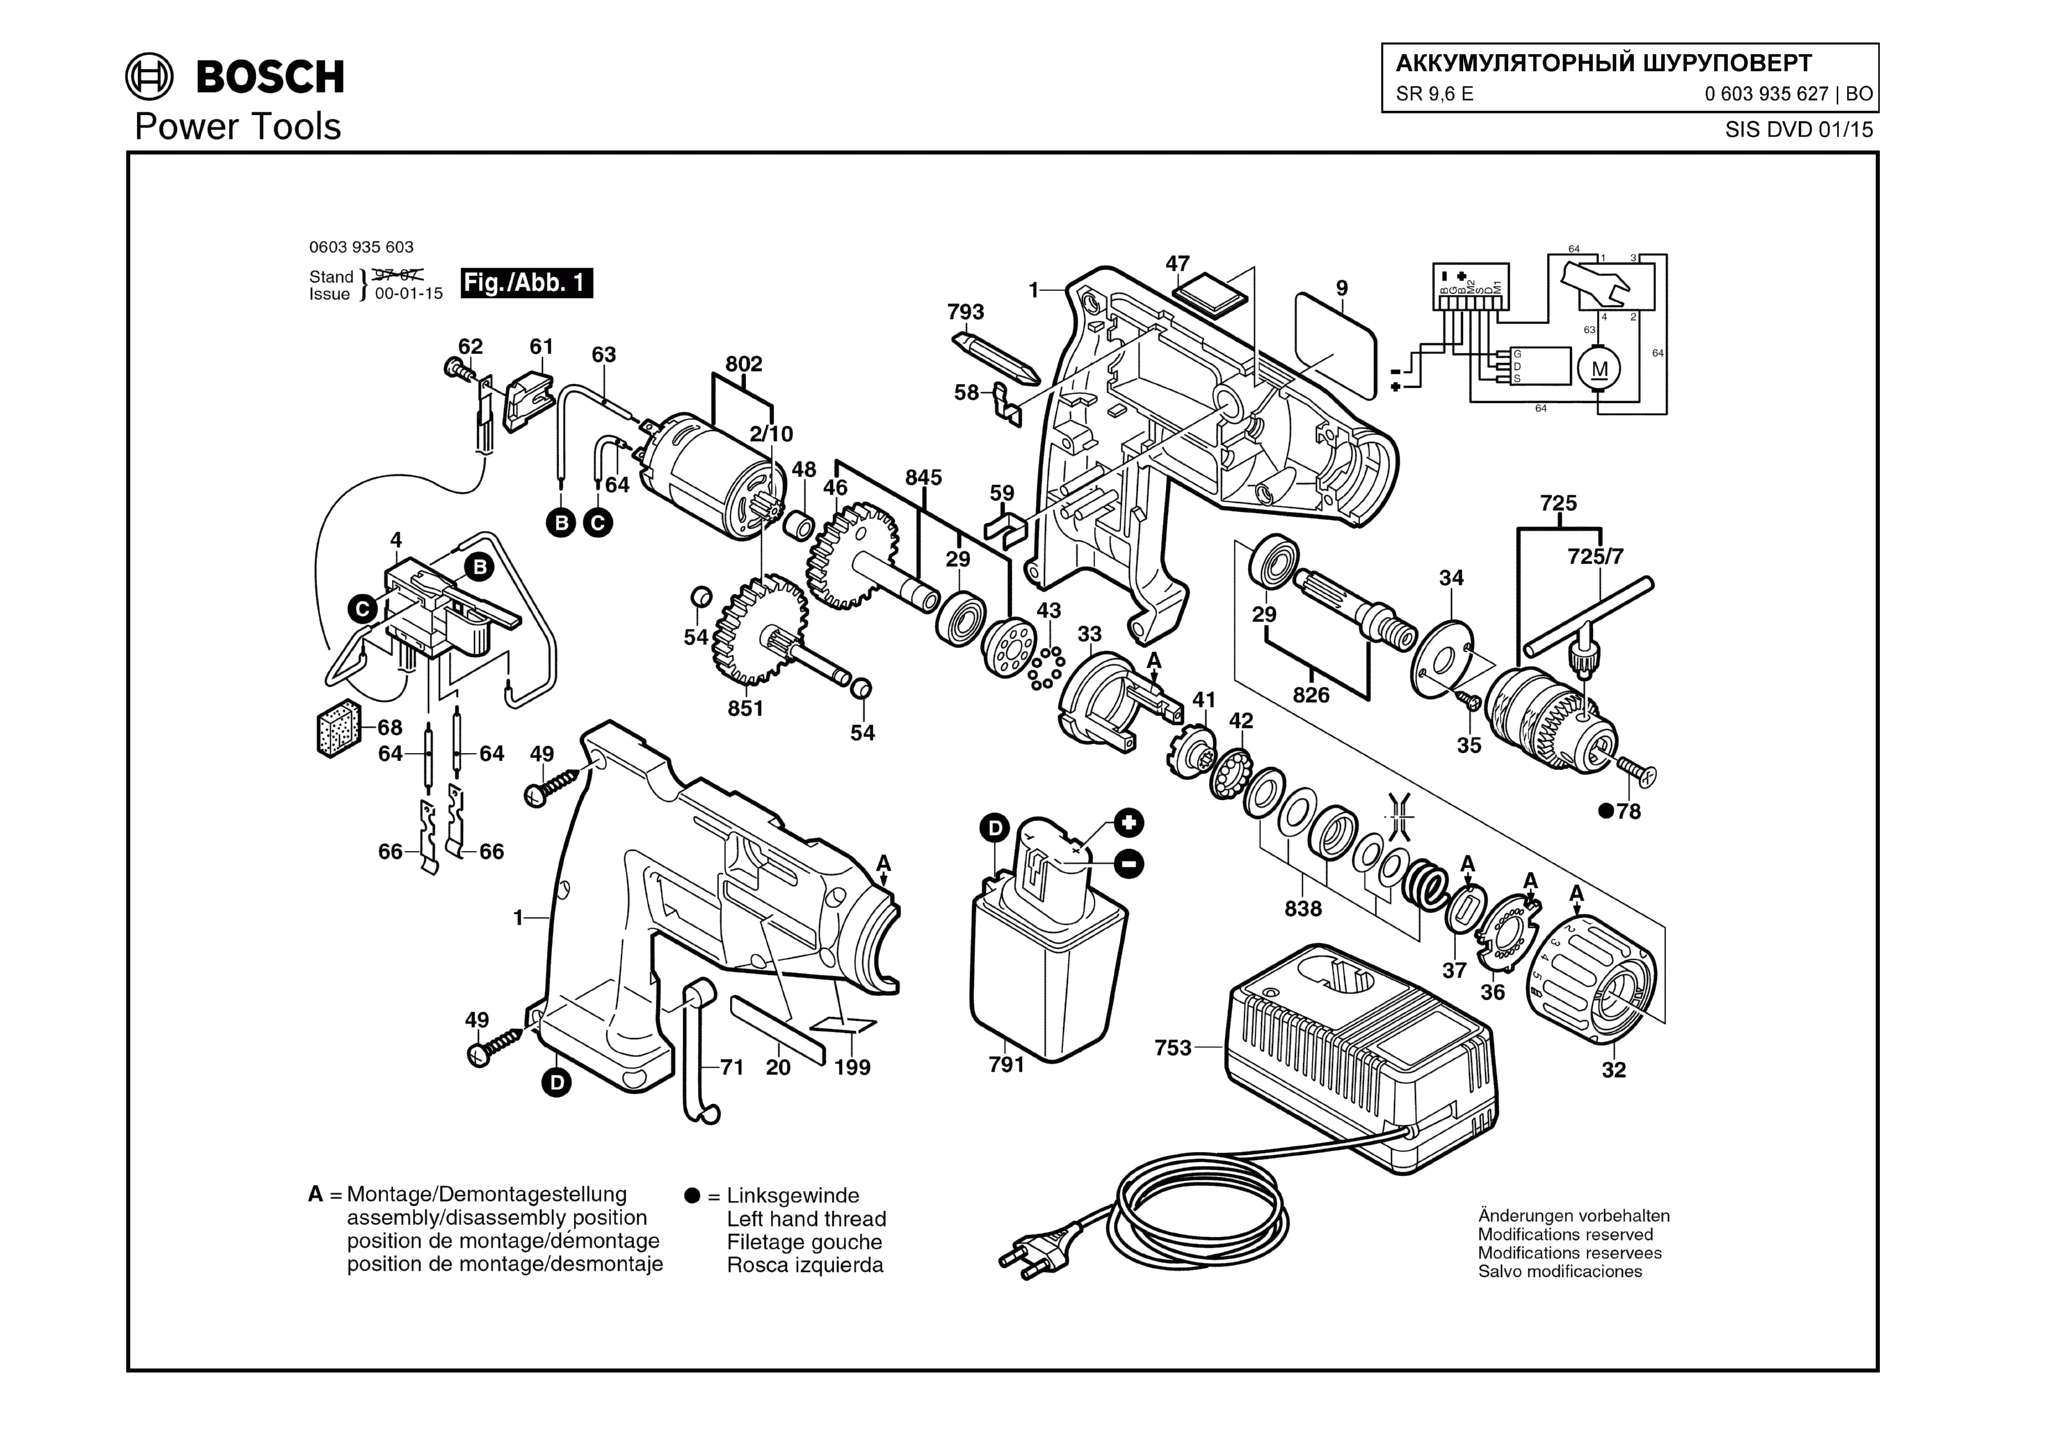 Запчасти, схема и деталировка Bosch SR 9,6 E (ТИП 0603935627)